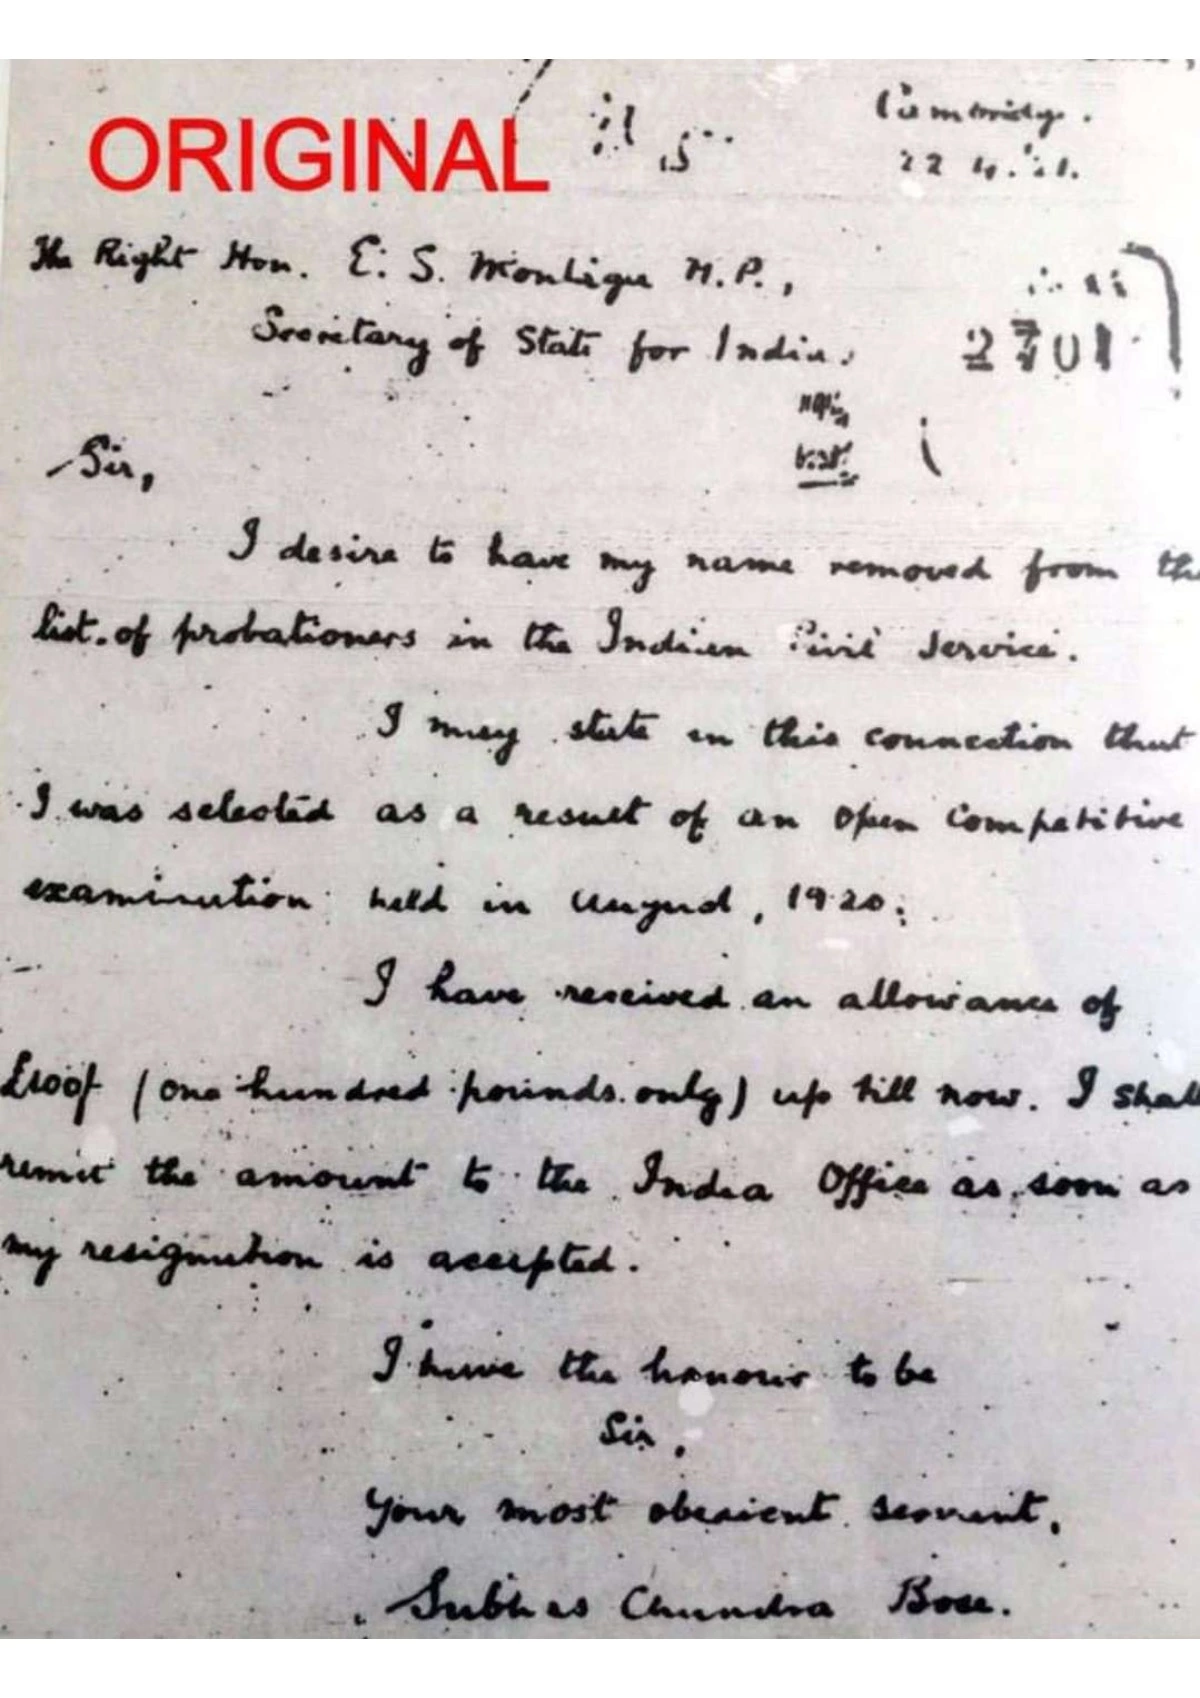 Netaji Subhash Chandra Bose's Resignation Letter from Civil Services